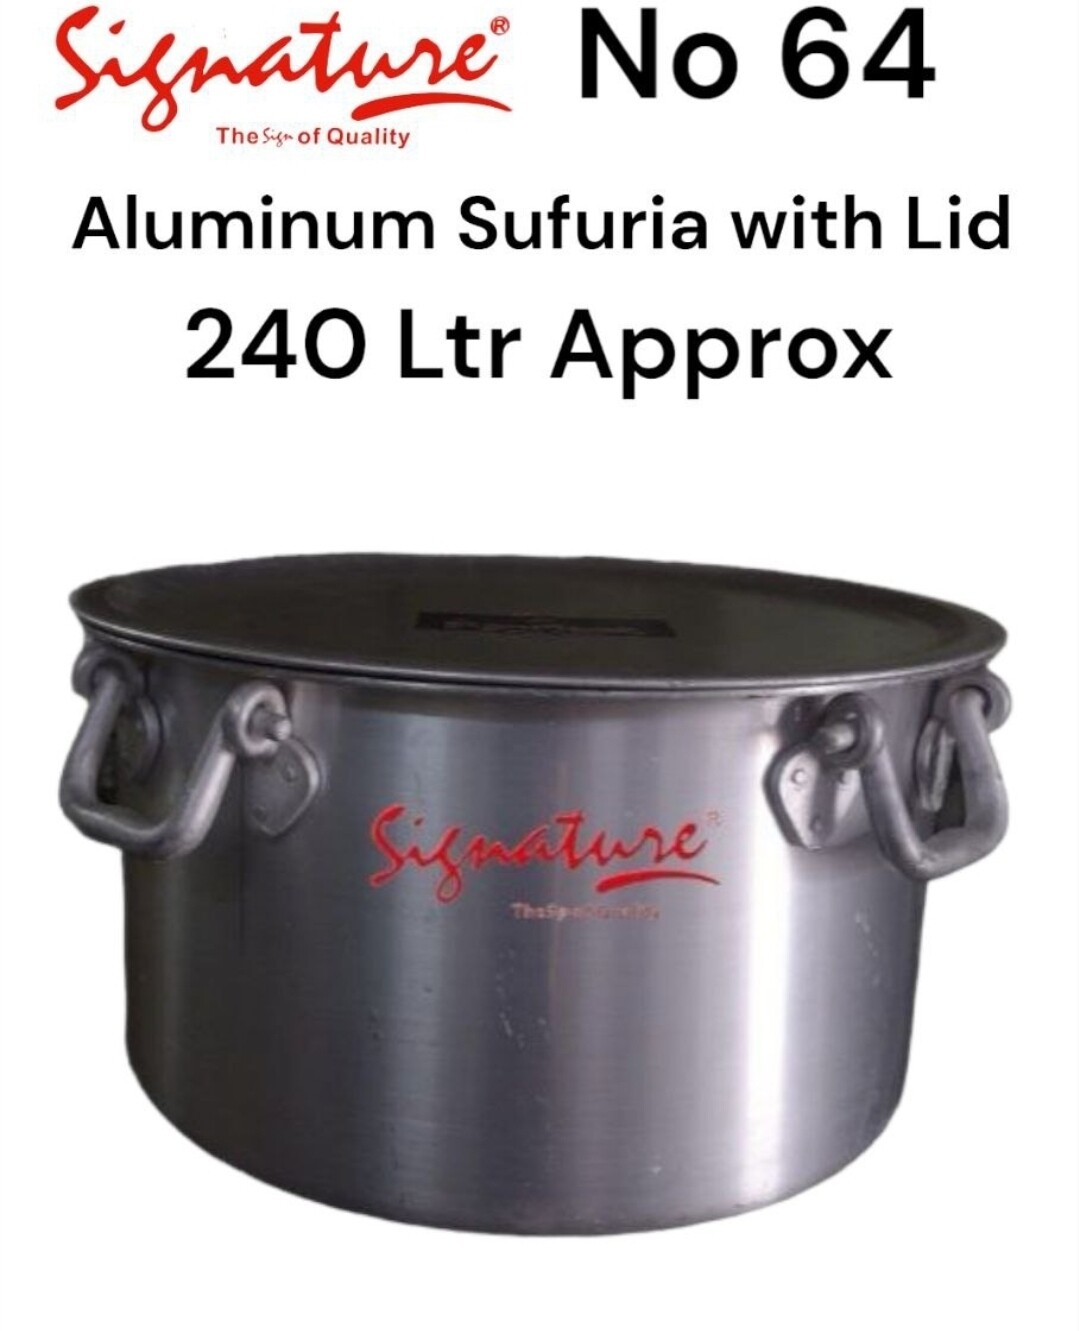 Signature heavy duty aluminium sufuria with lid 240Litres